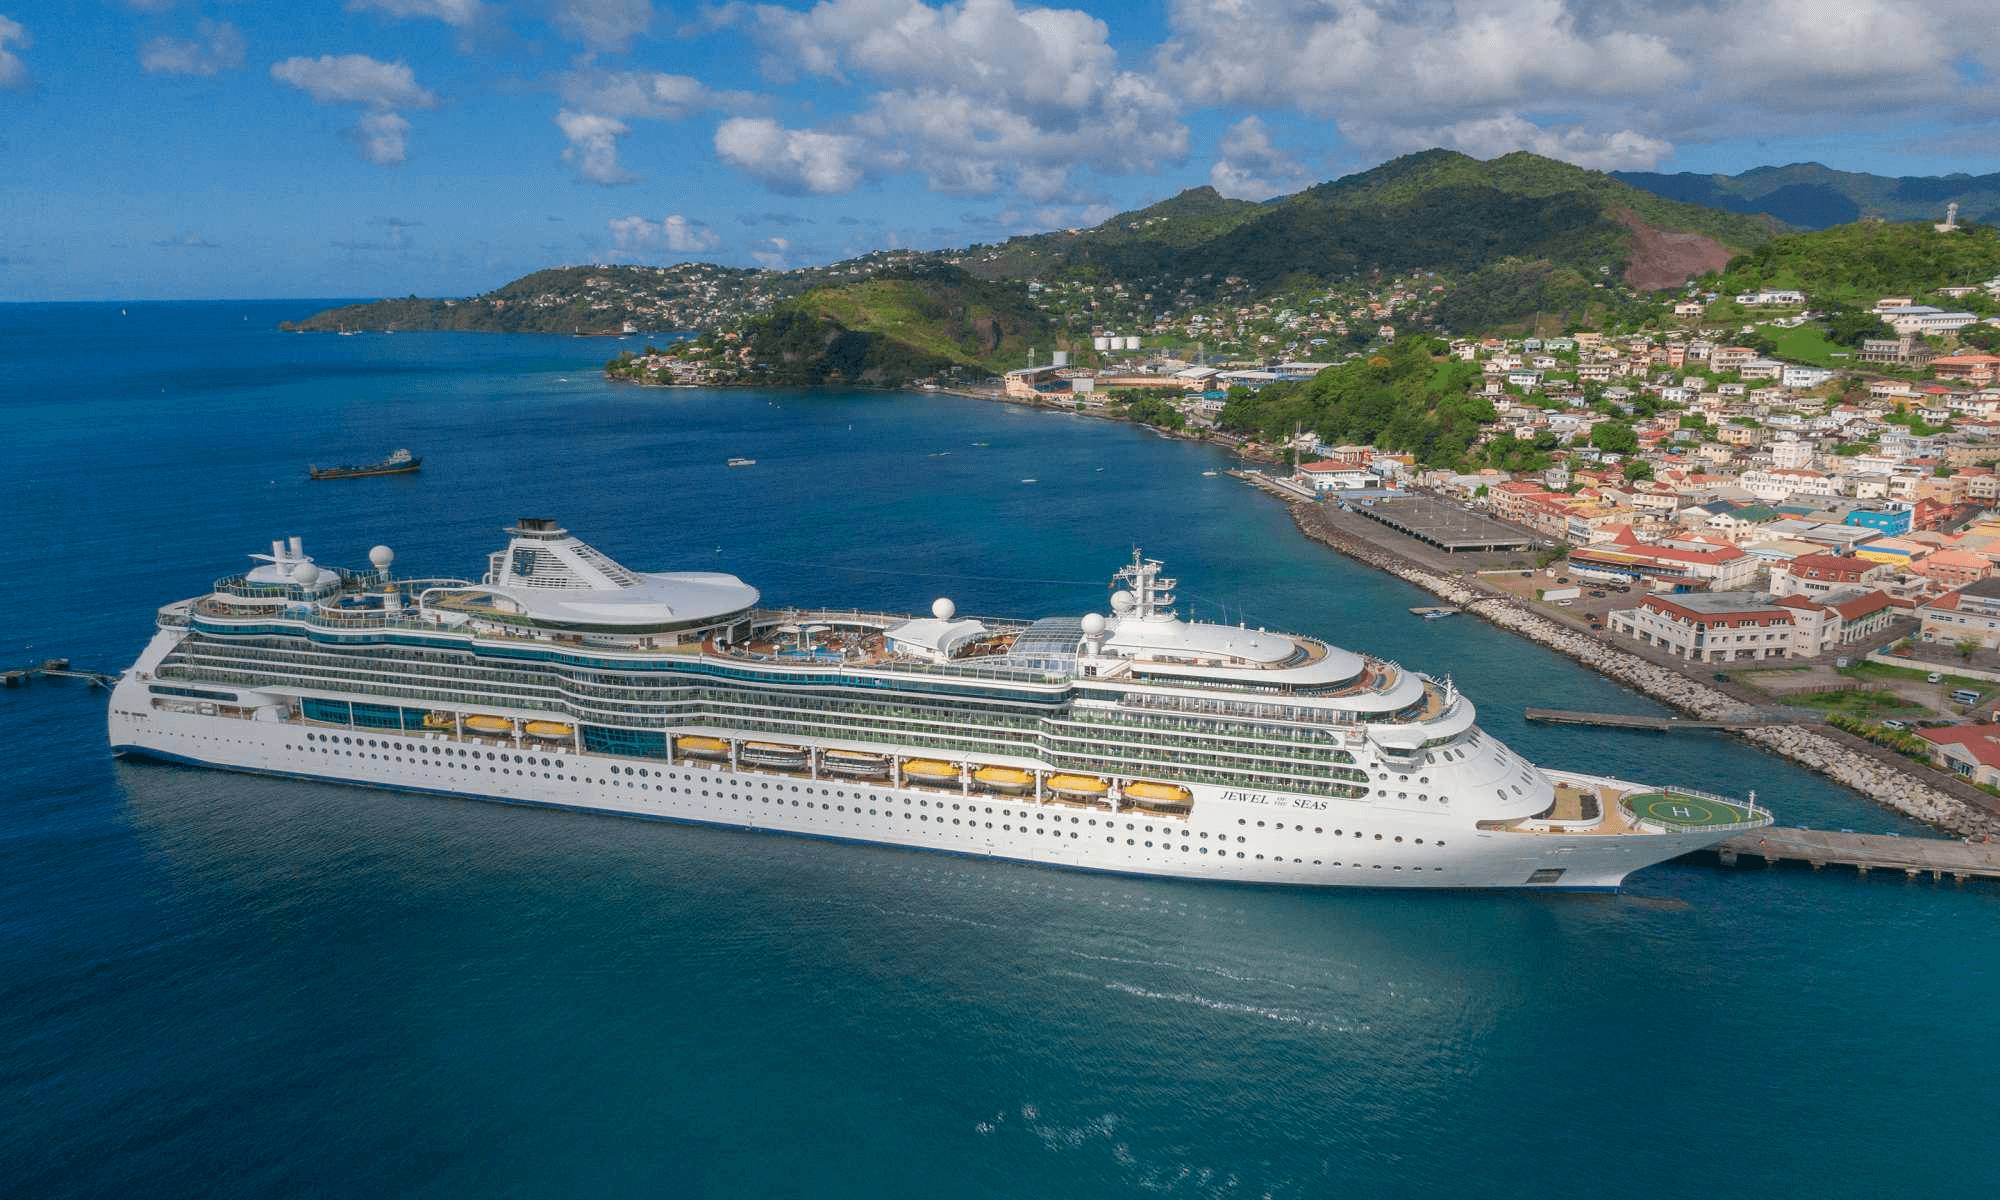 Jewel of the Seas in Grenada